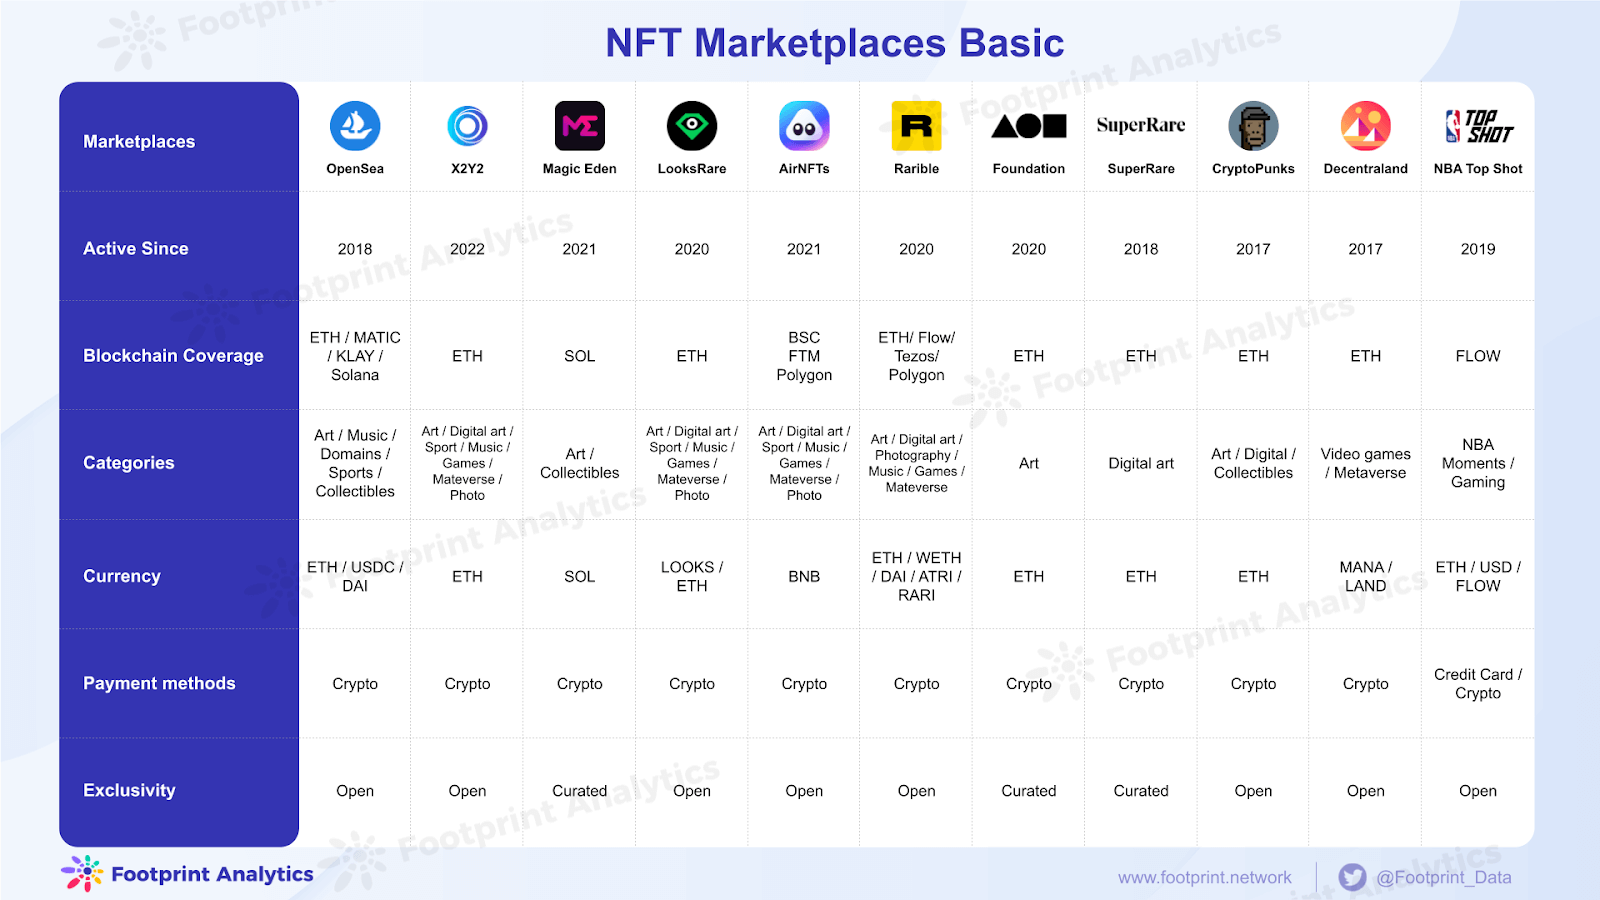 Footprint Analytics - NFT Marketplace Basic